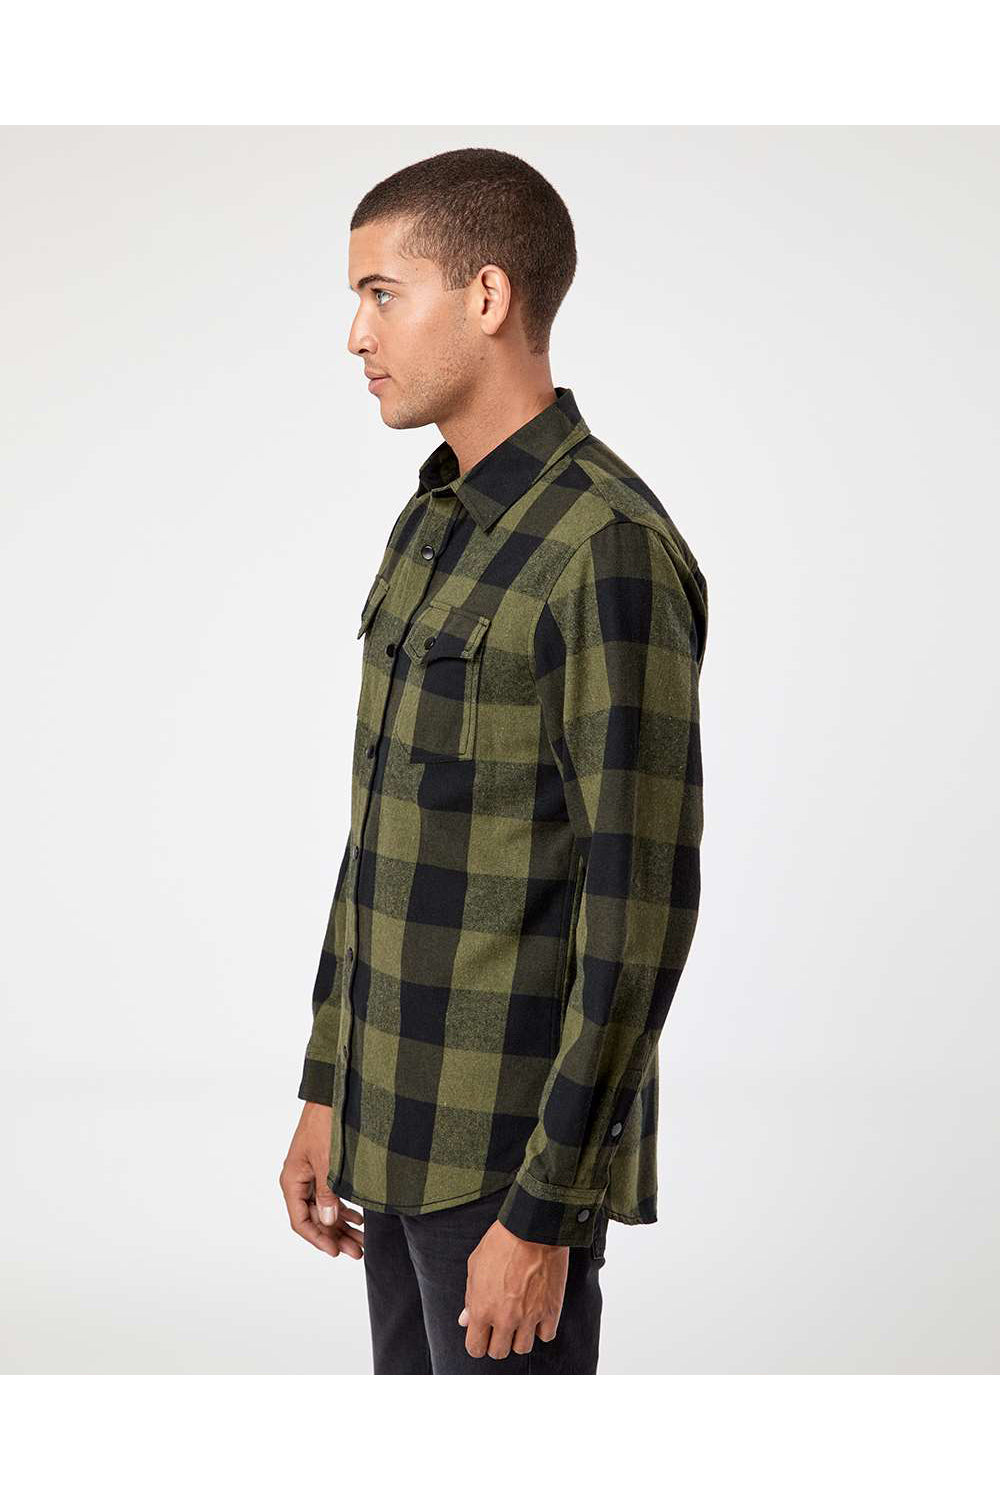 Burnside 8219 Mens Plaid Flannel Long Sleeve Snap Down Shirt w/ Double Pockets Army Green/Black Model Back